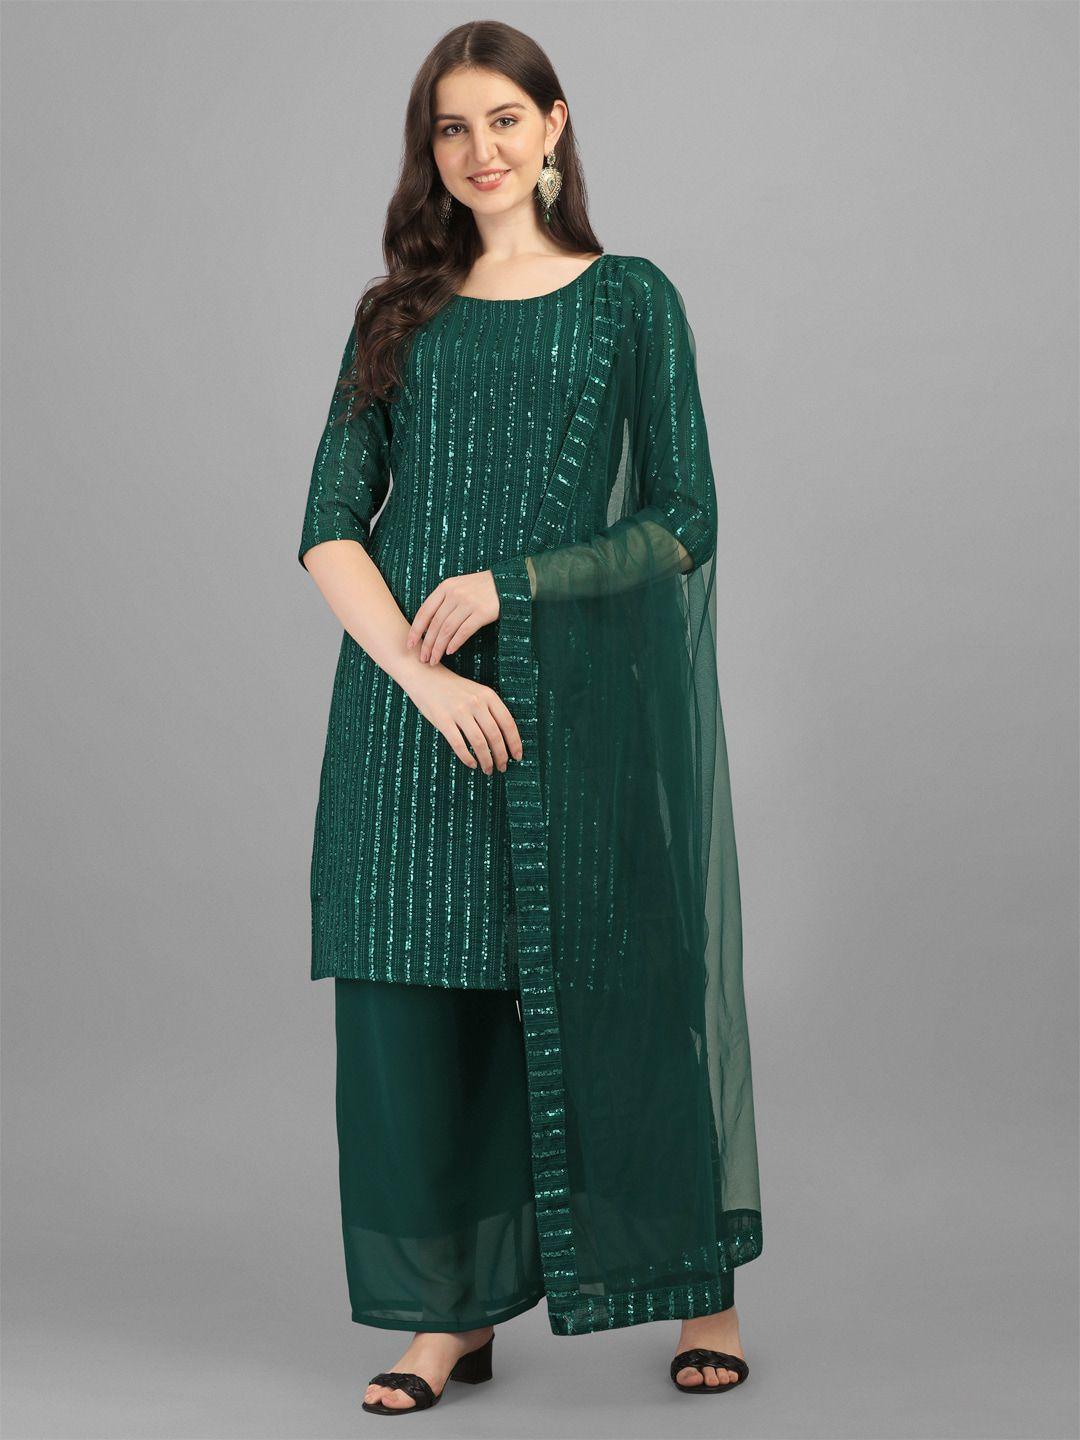 jatriqq teal embroidered faux georgette semi-stitched dress material